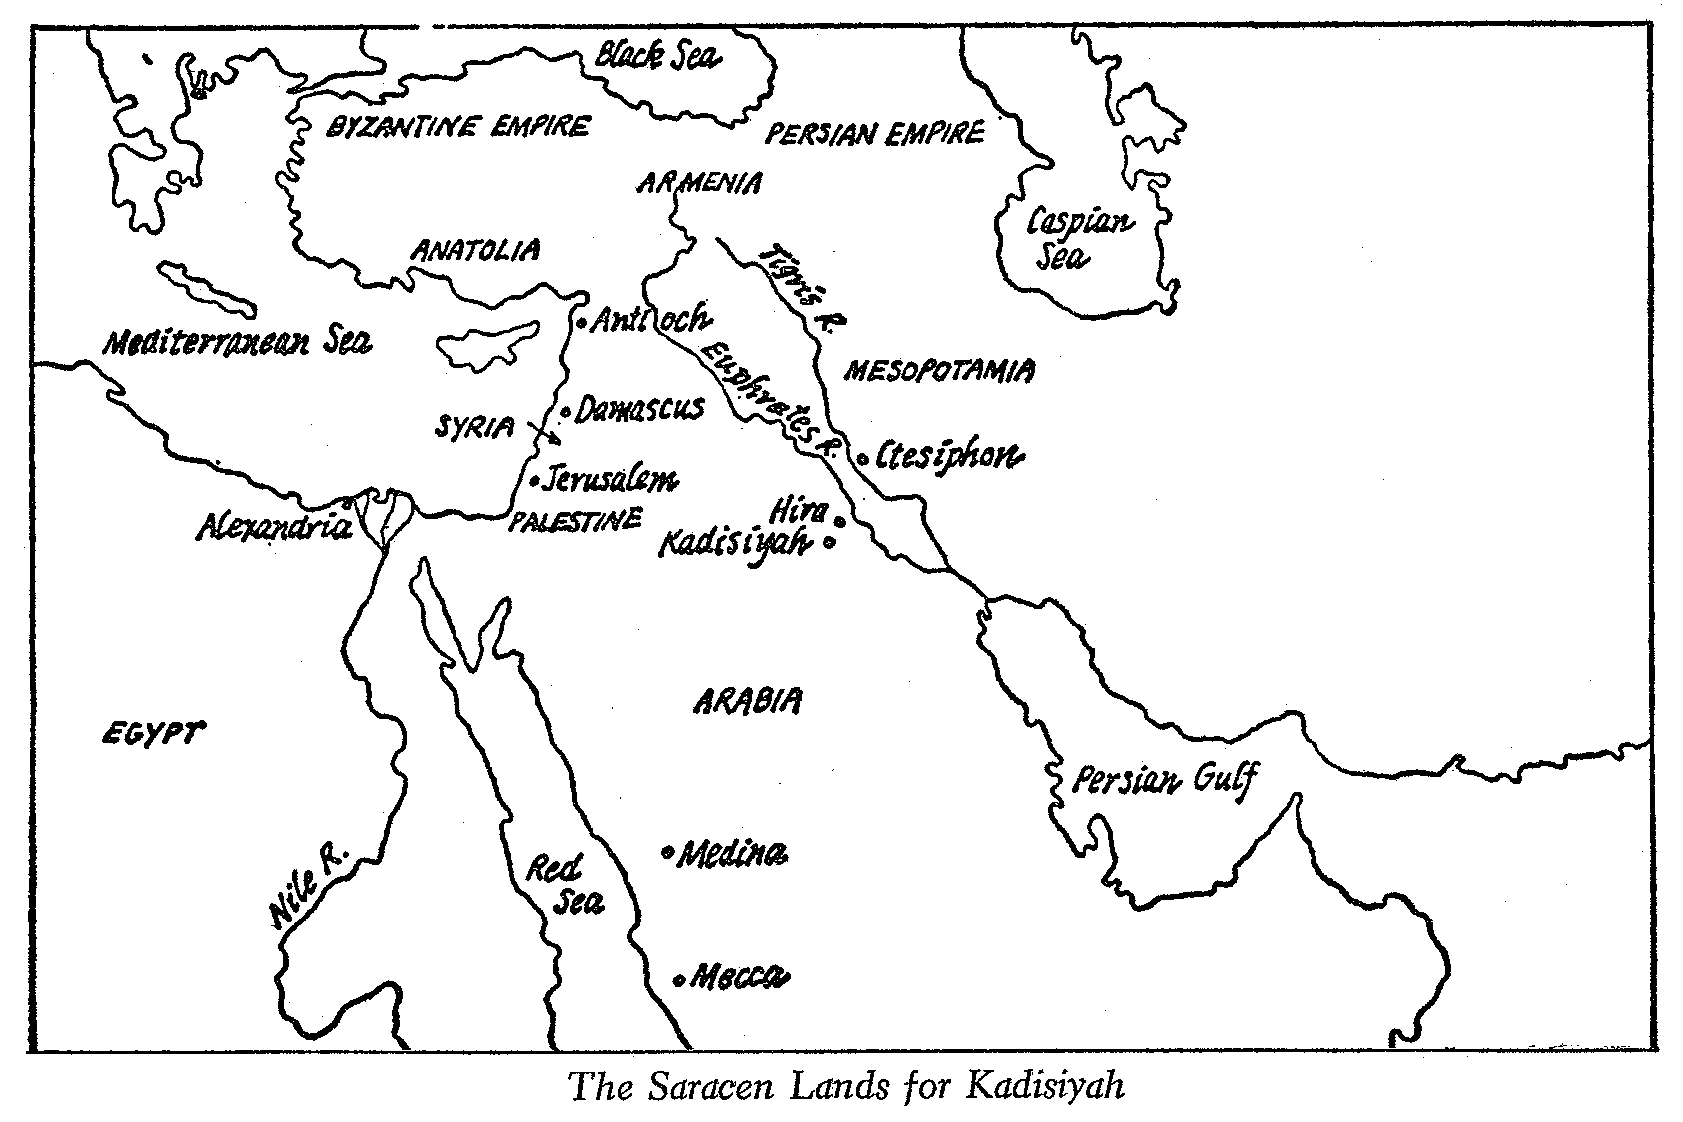 The Saracen Lands for Kadisiyah